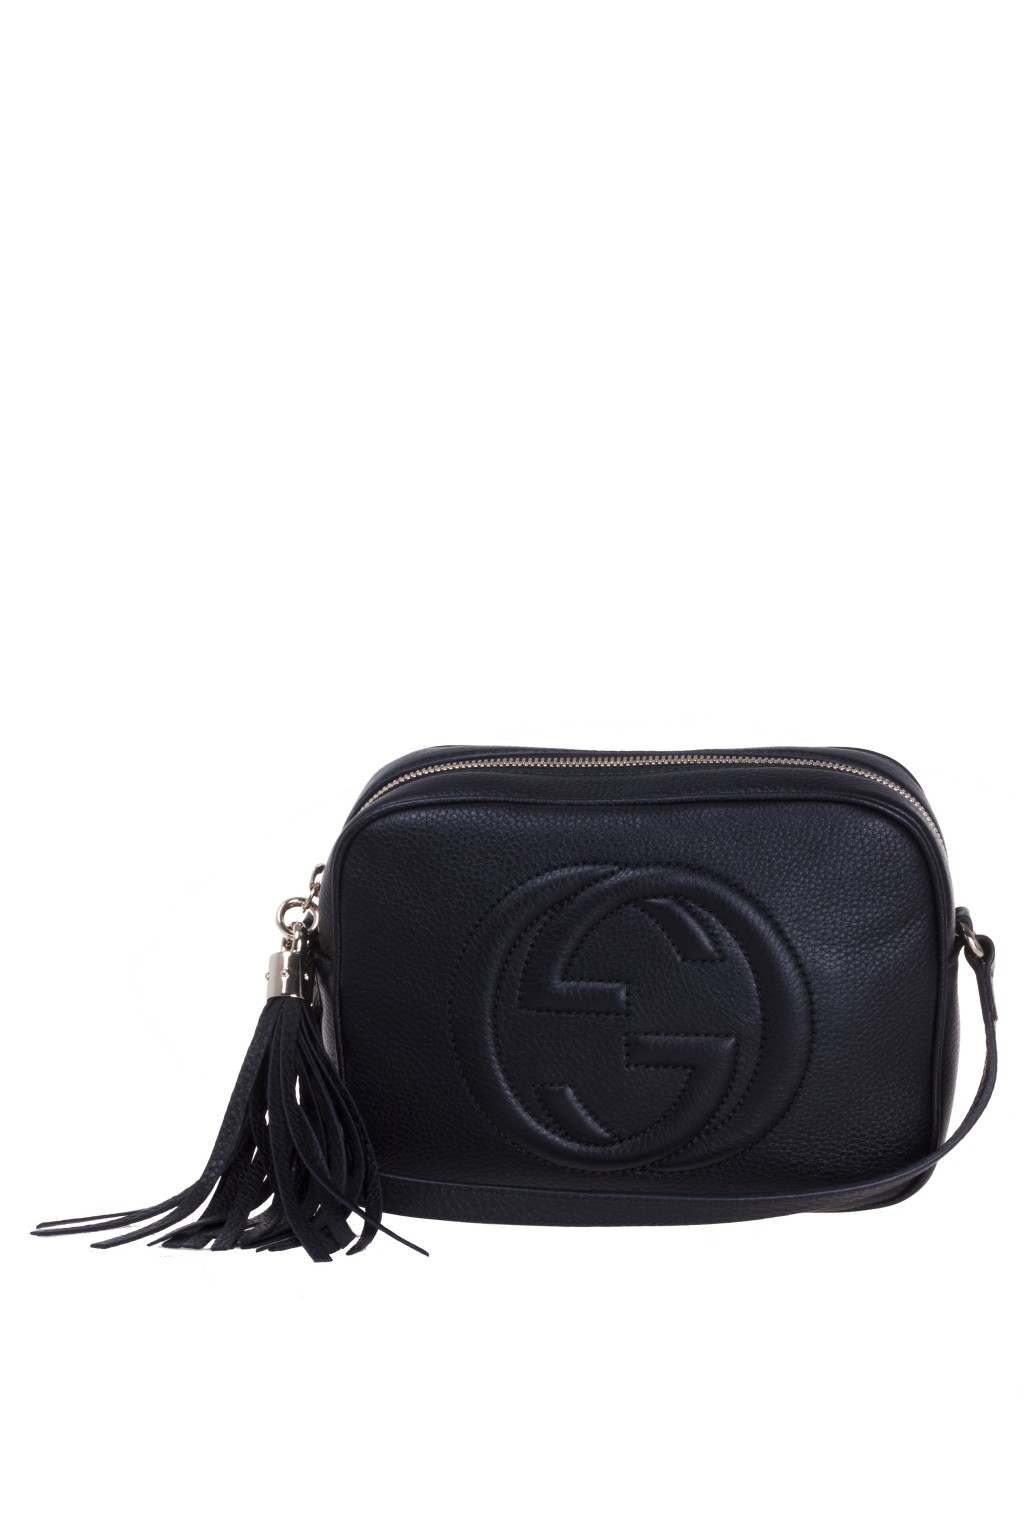 Black 'Soho Disco' shoulder bag Gucci - Vitkac GB